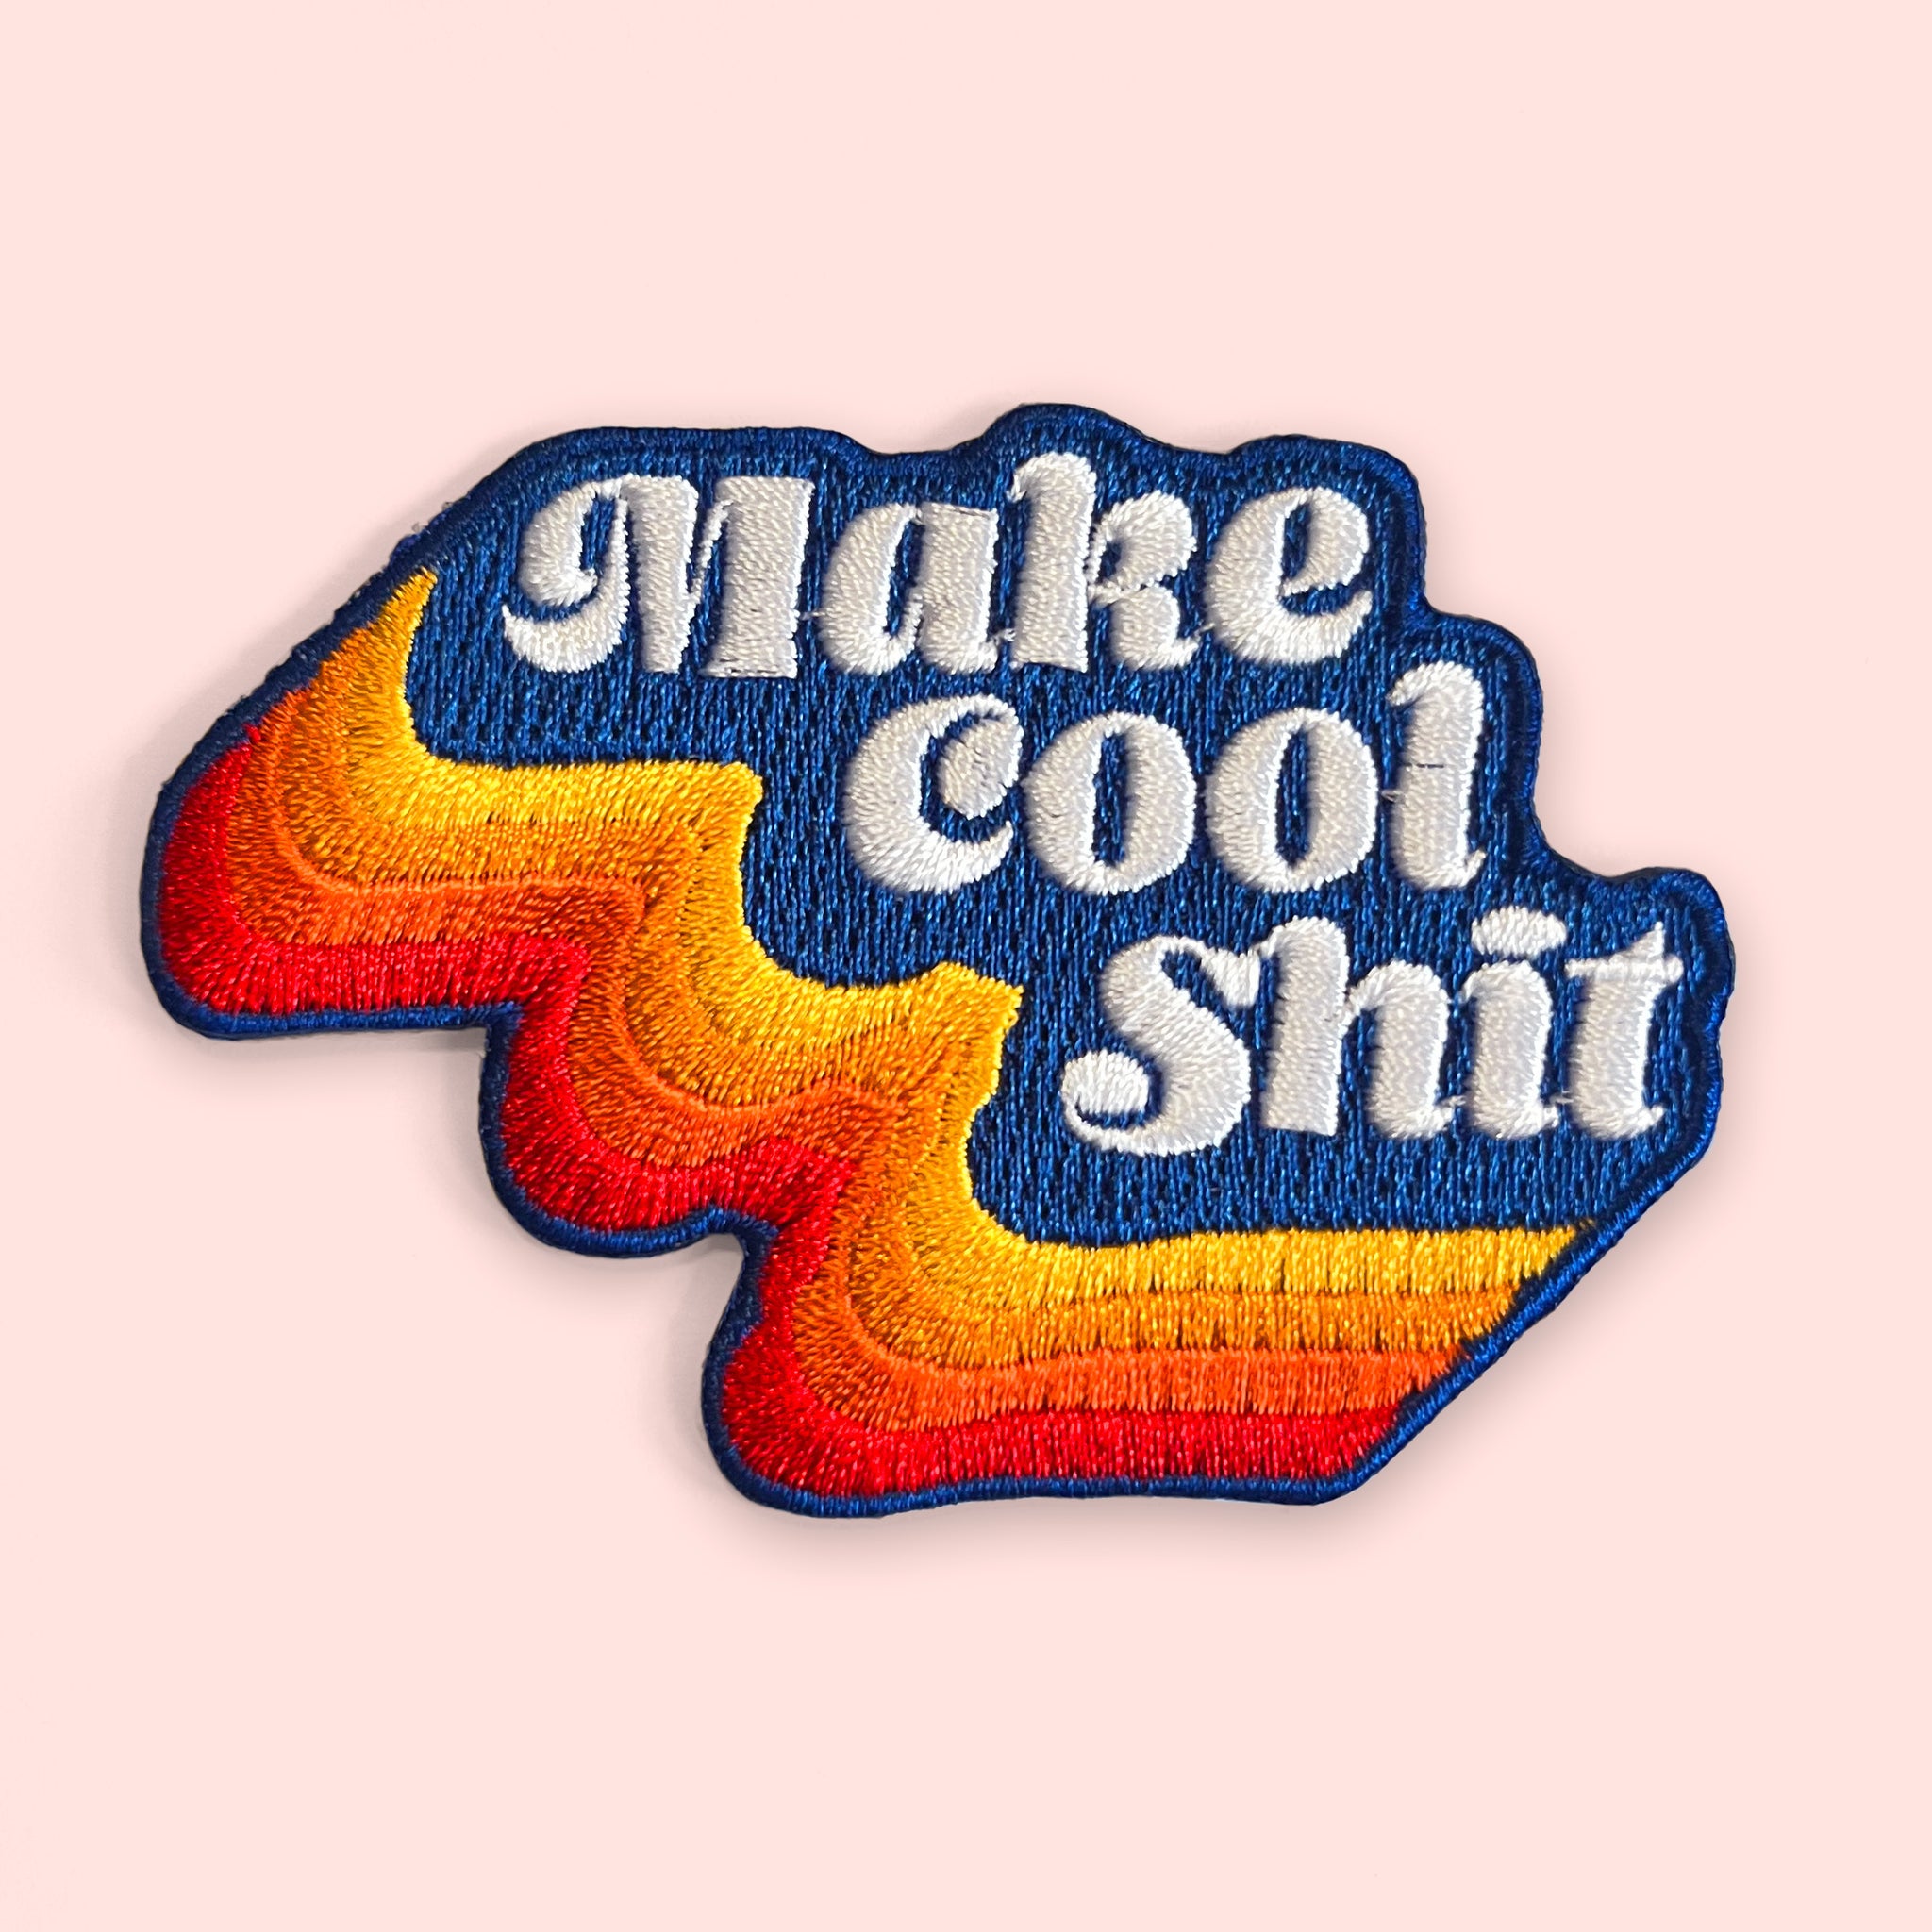 Make Cool Shit - Patch